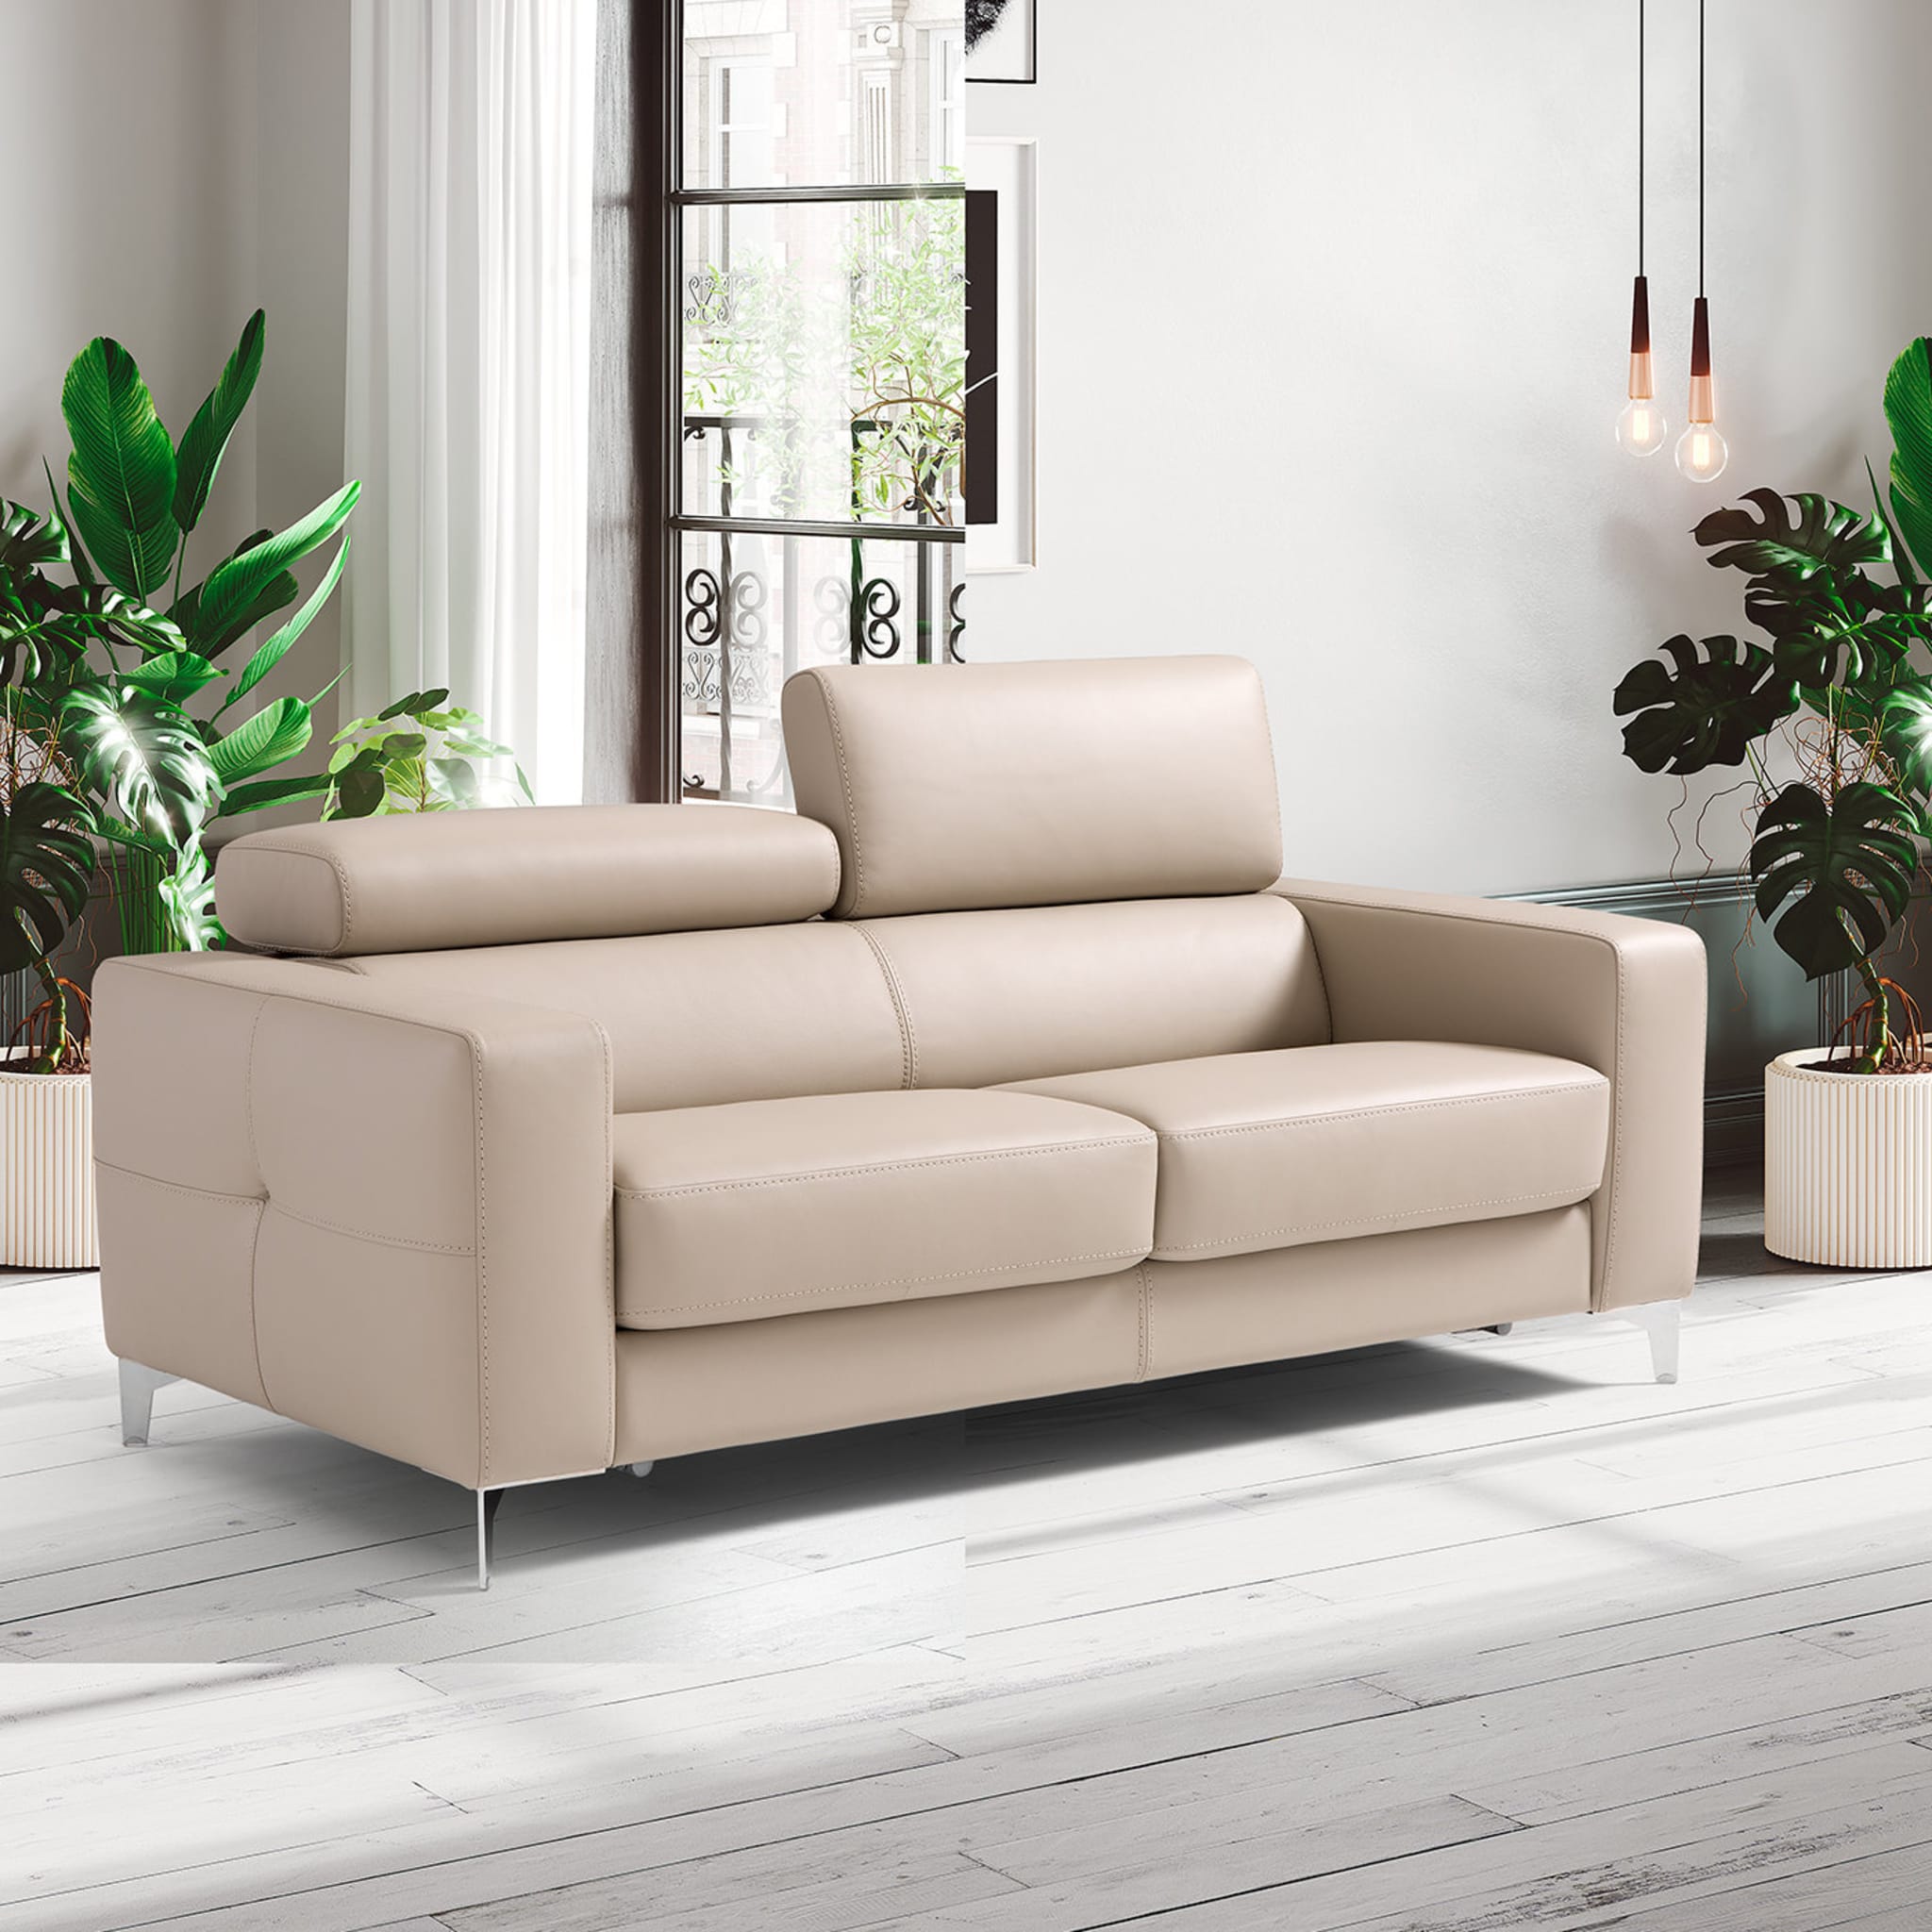 Verona Beige Leather 2-Seater Sofa Bed - Alternative view 1